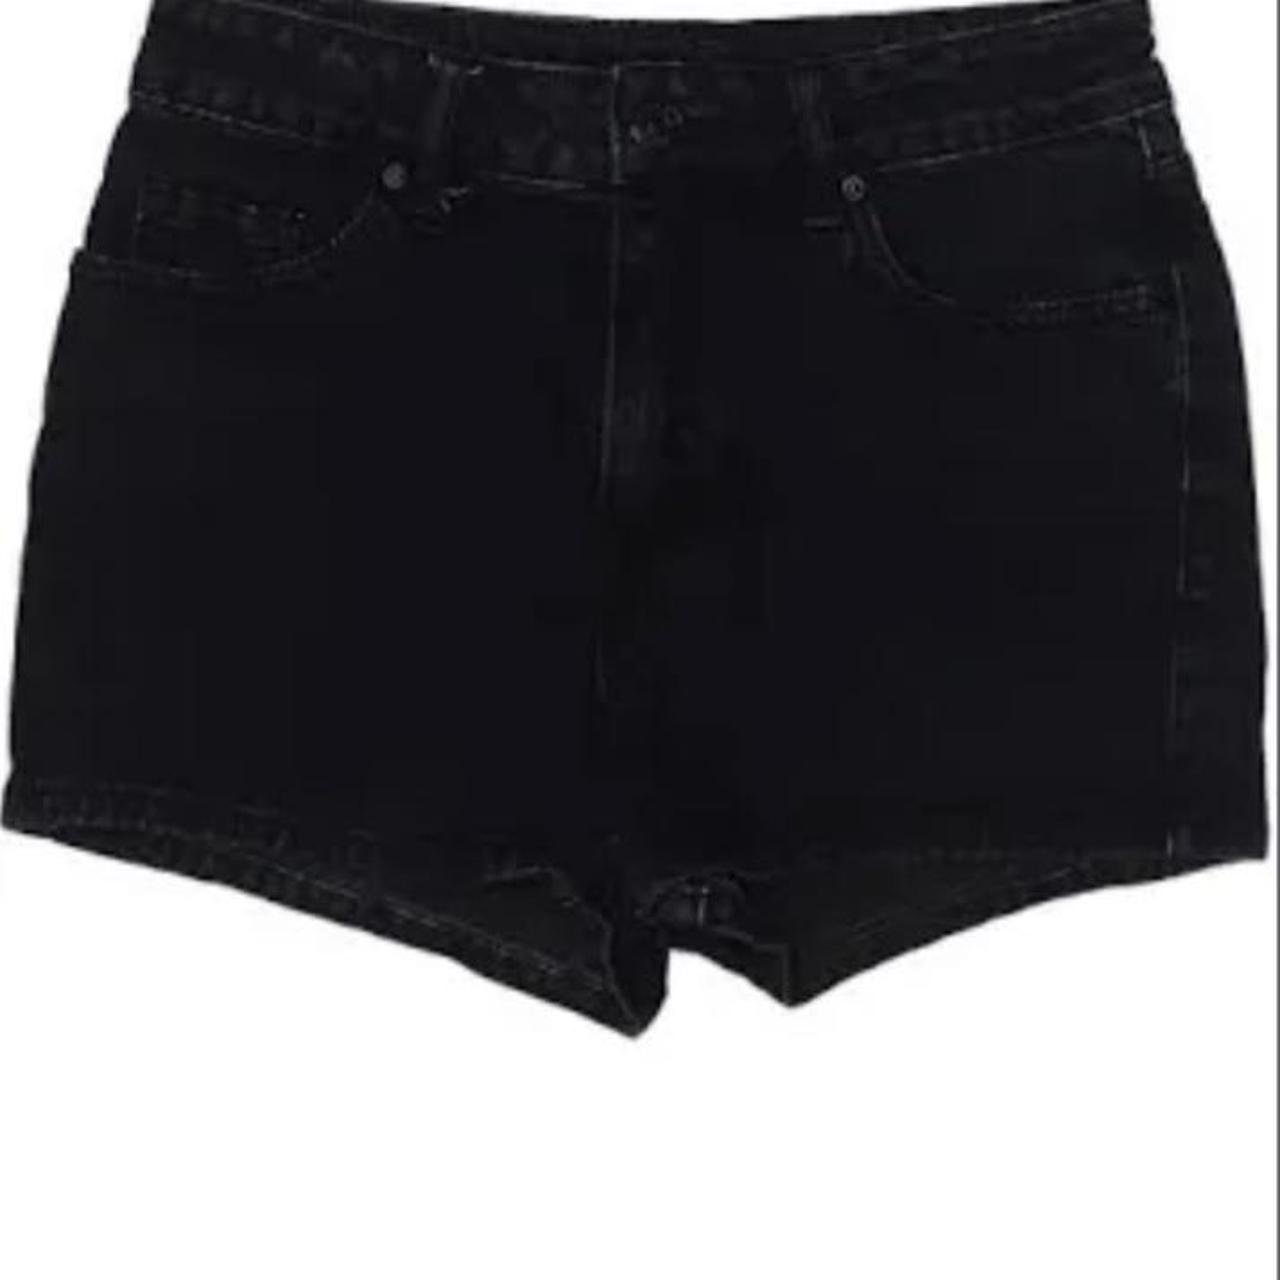 BDG black denim shorts very comfortable and trendy... - Depop